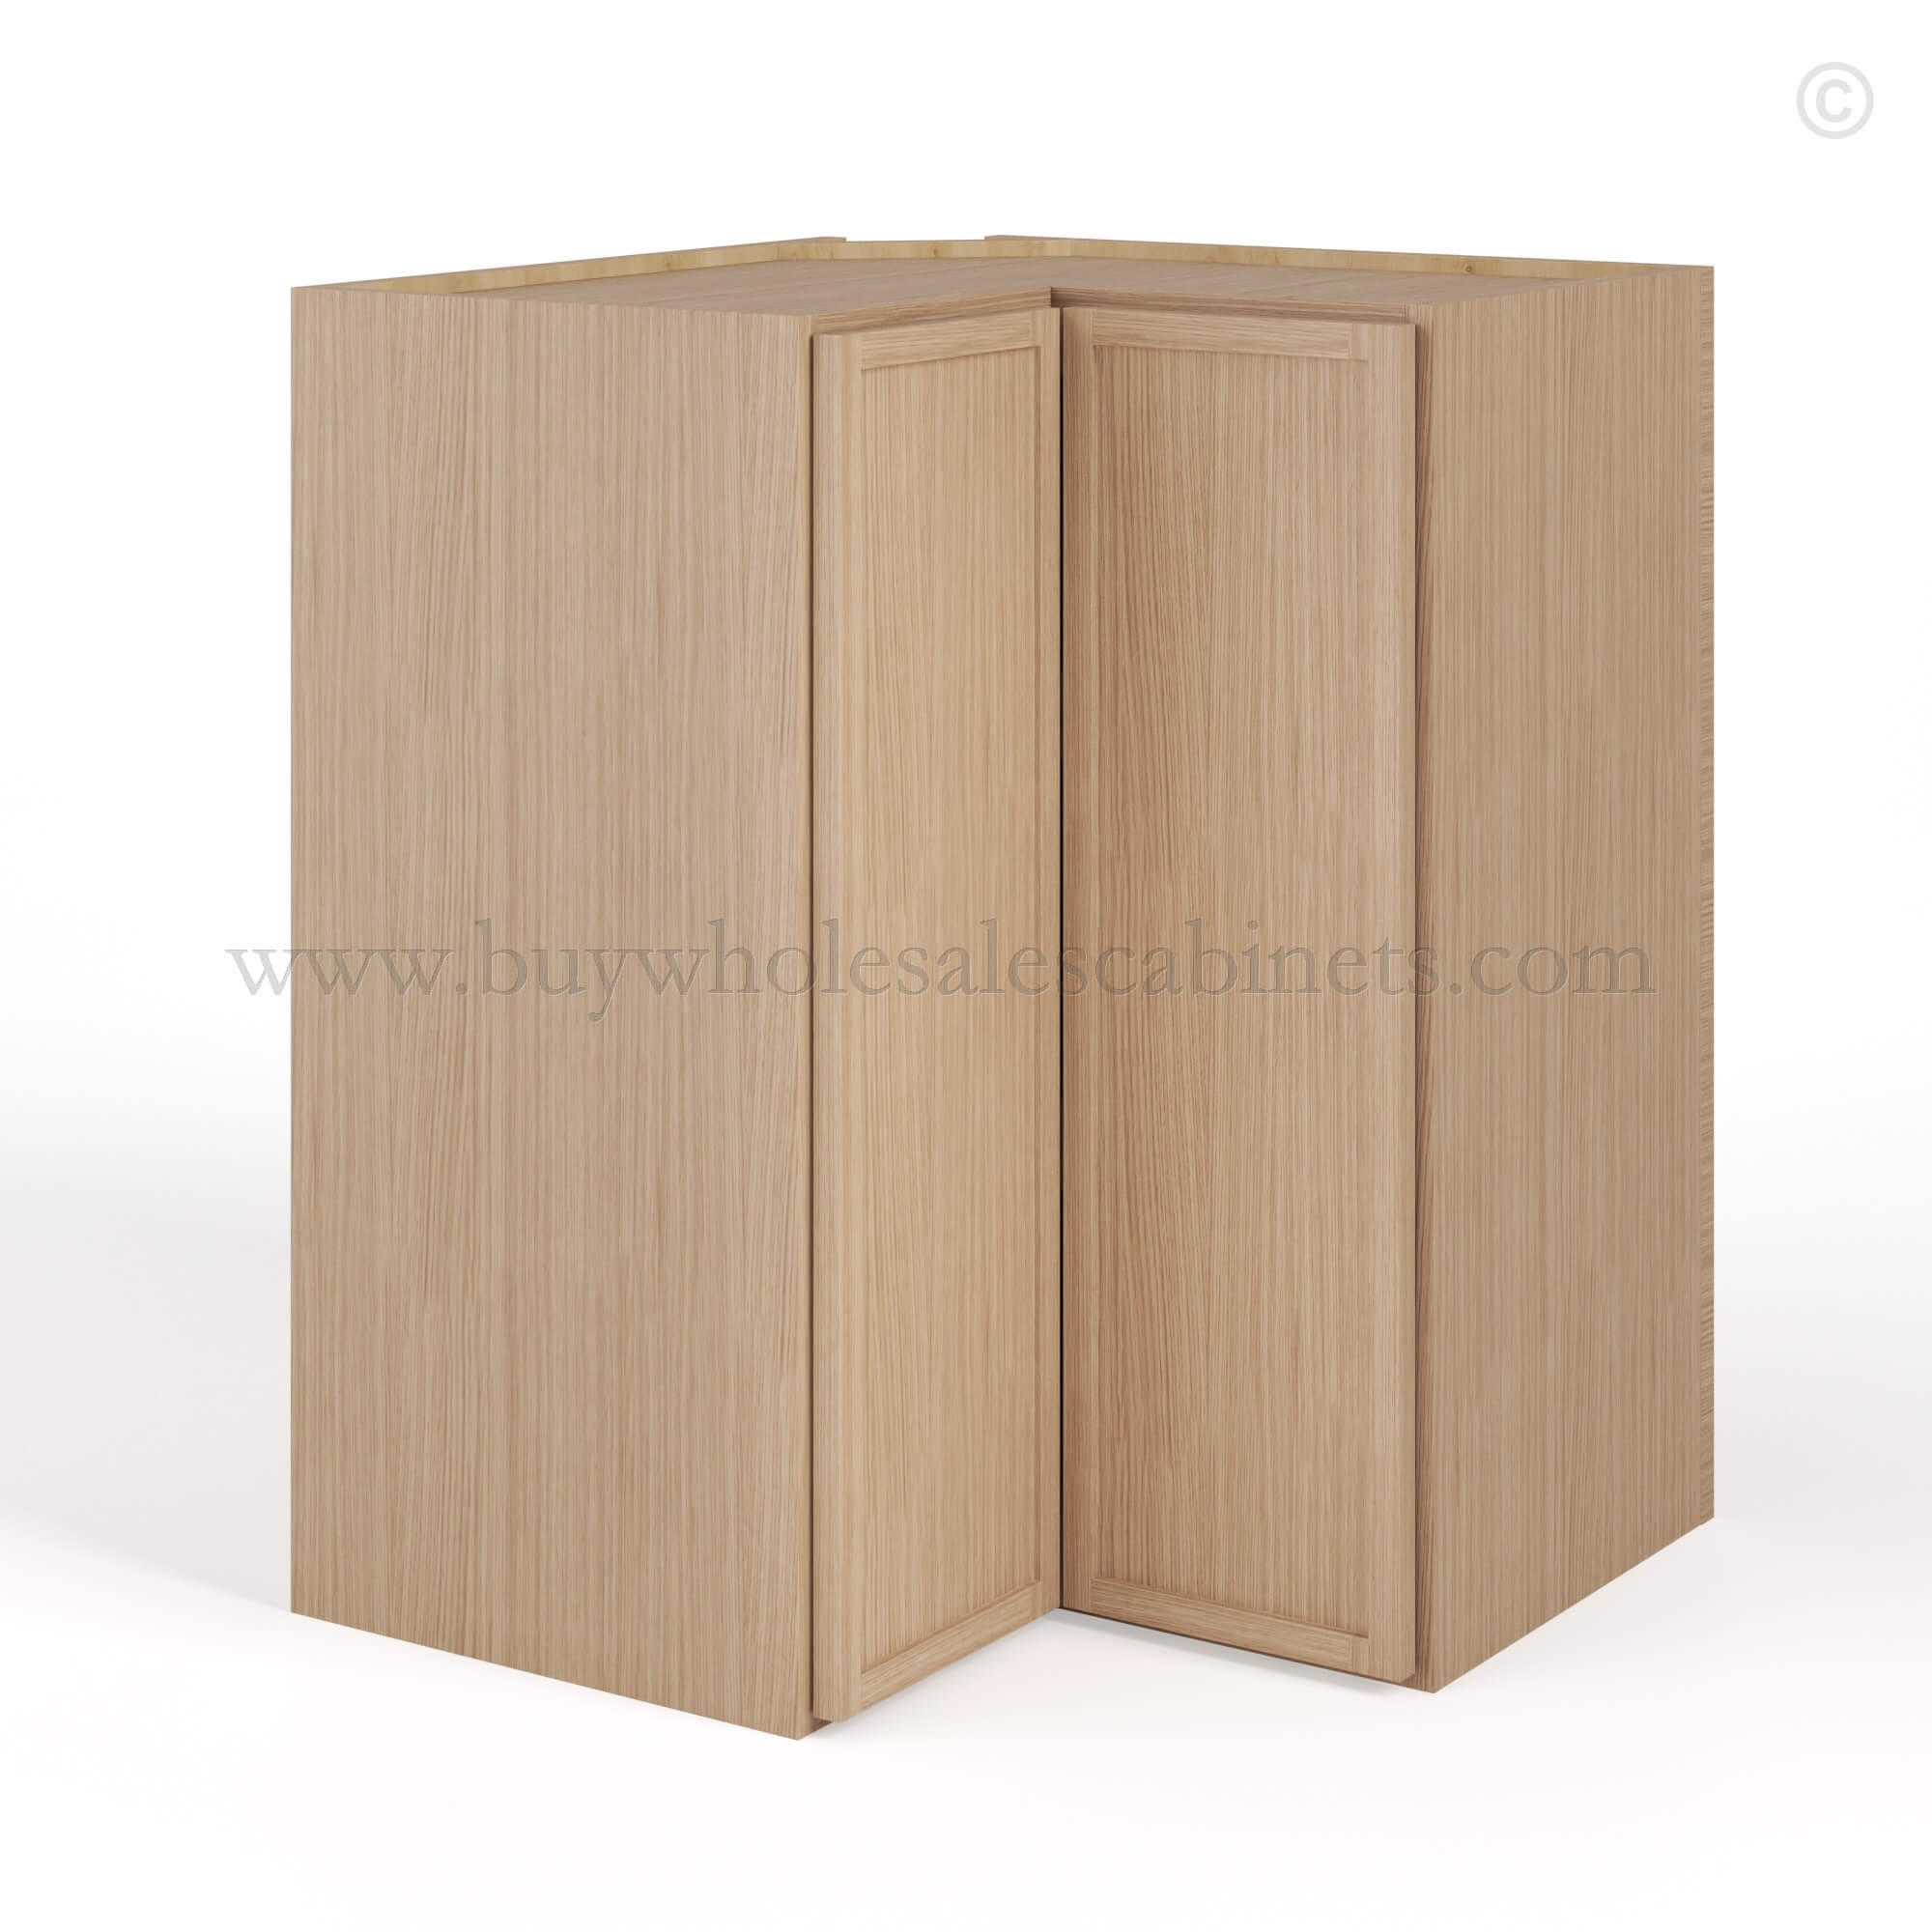 Slim Oak Shaker Easy Reach Wall Cabinet, rta cabinets, wholesale cabinets